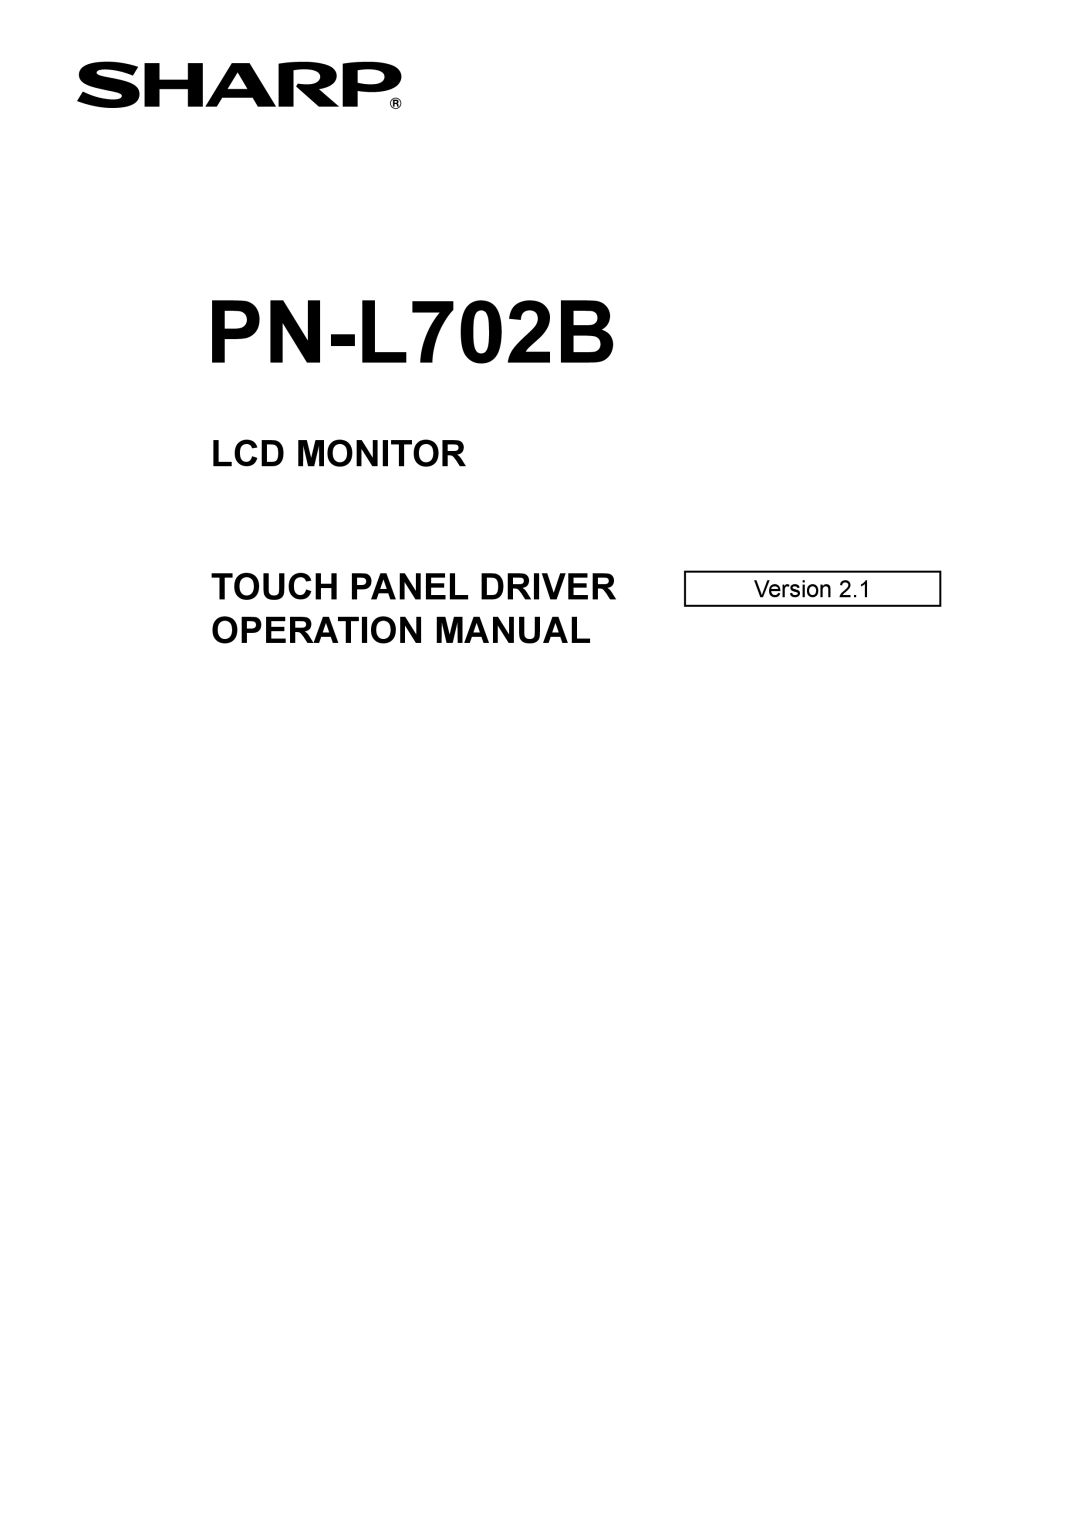 Sharp PNL802B operation manual PN-L802B PN-L702B PN-L602B, Lcd Monitor, Touch Panel Driver Operation Manual, Version 